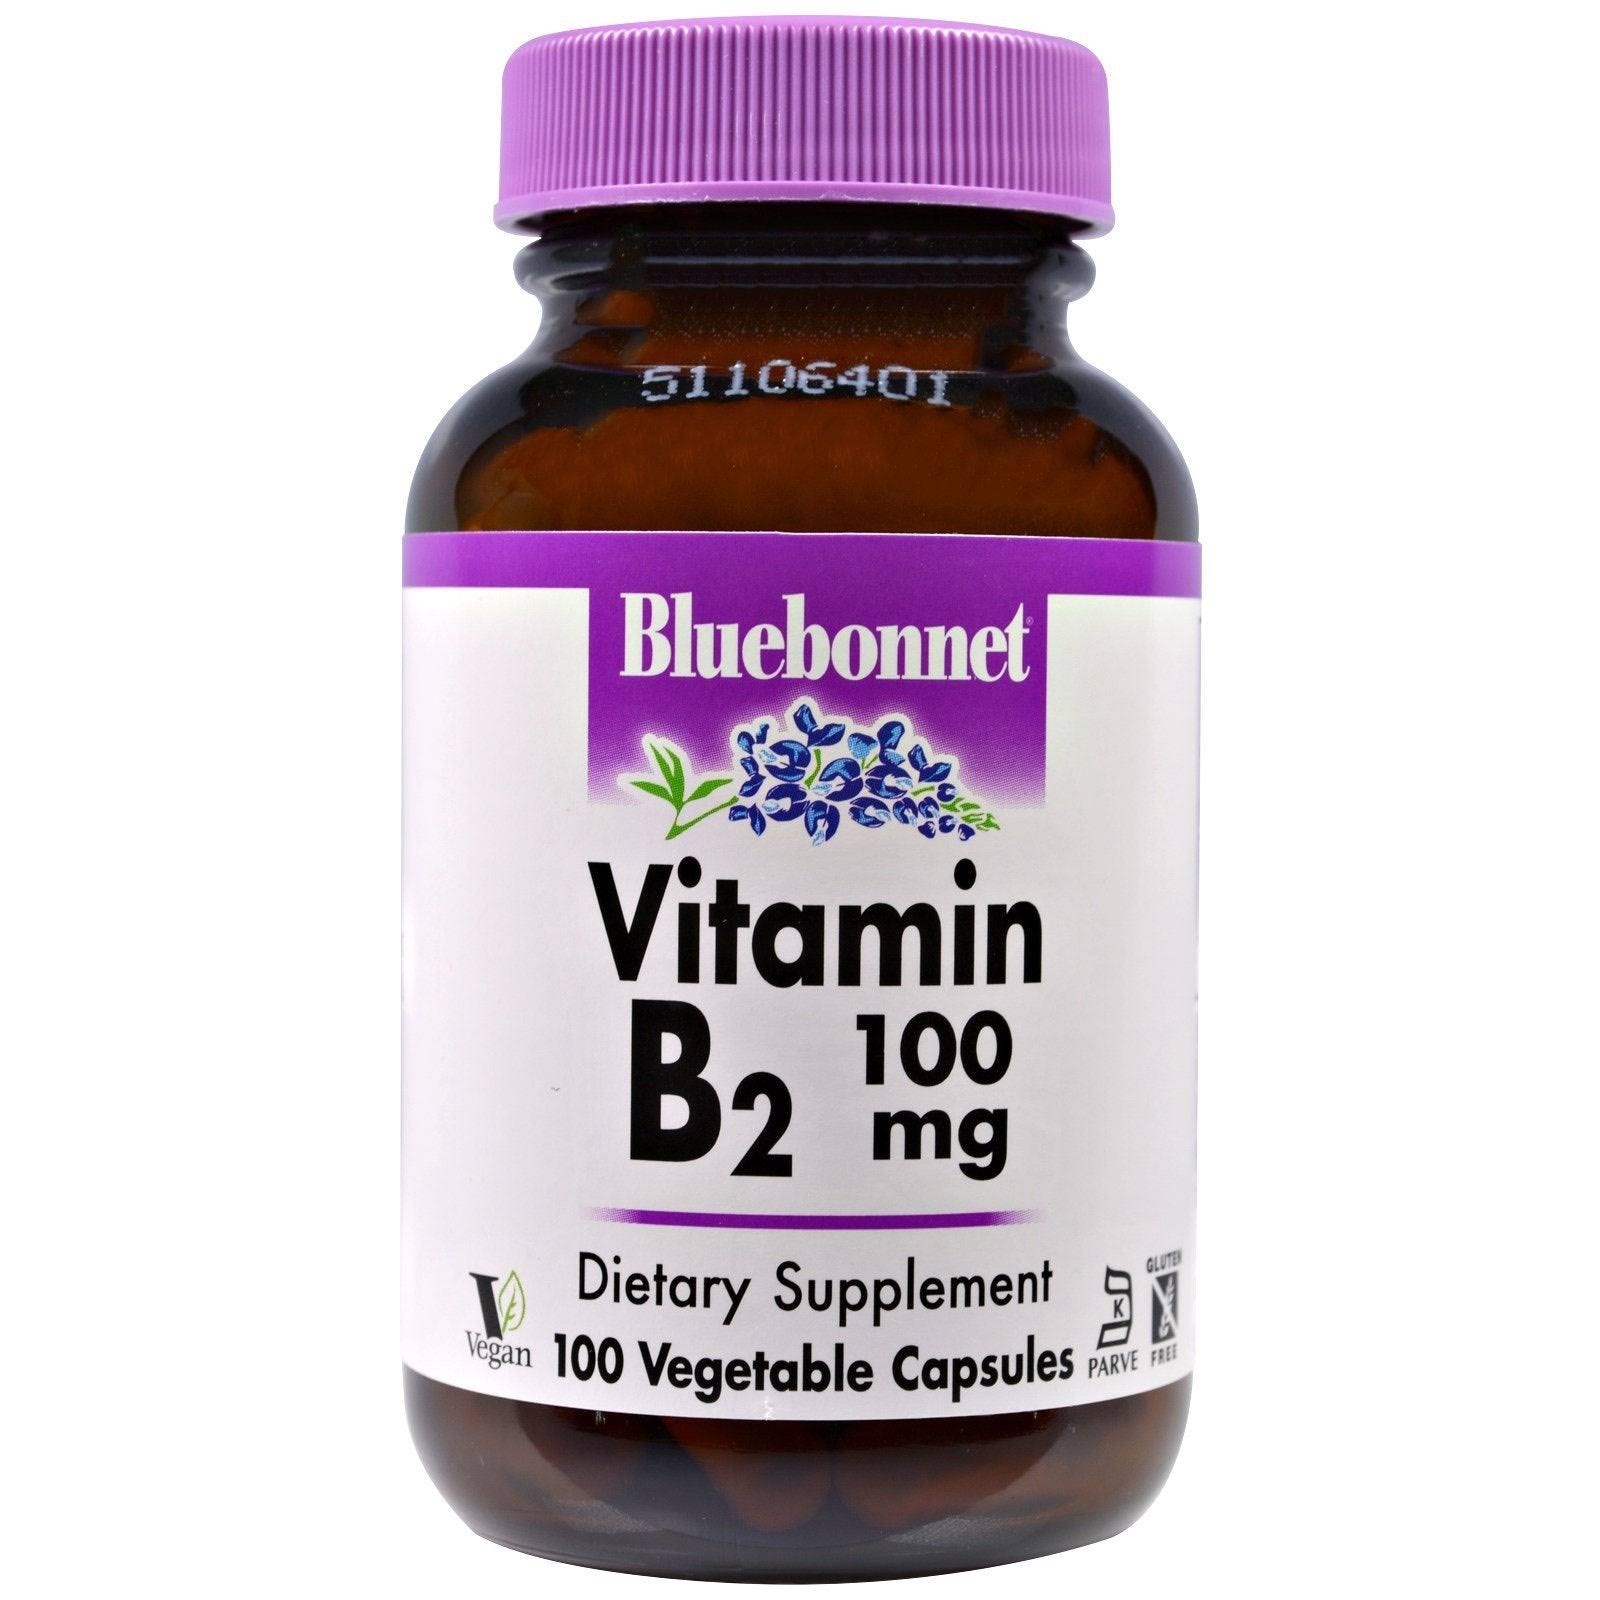 Bluebonnet Nutrition Vitamin B2 - 100 MG - 100 Vegetable Capsules